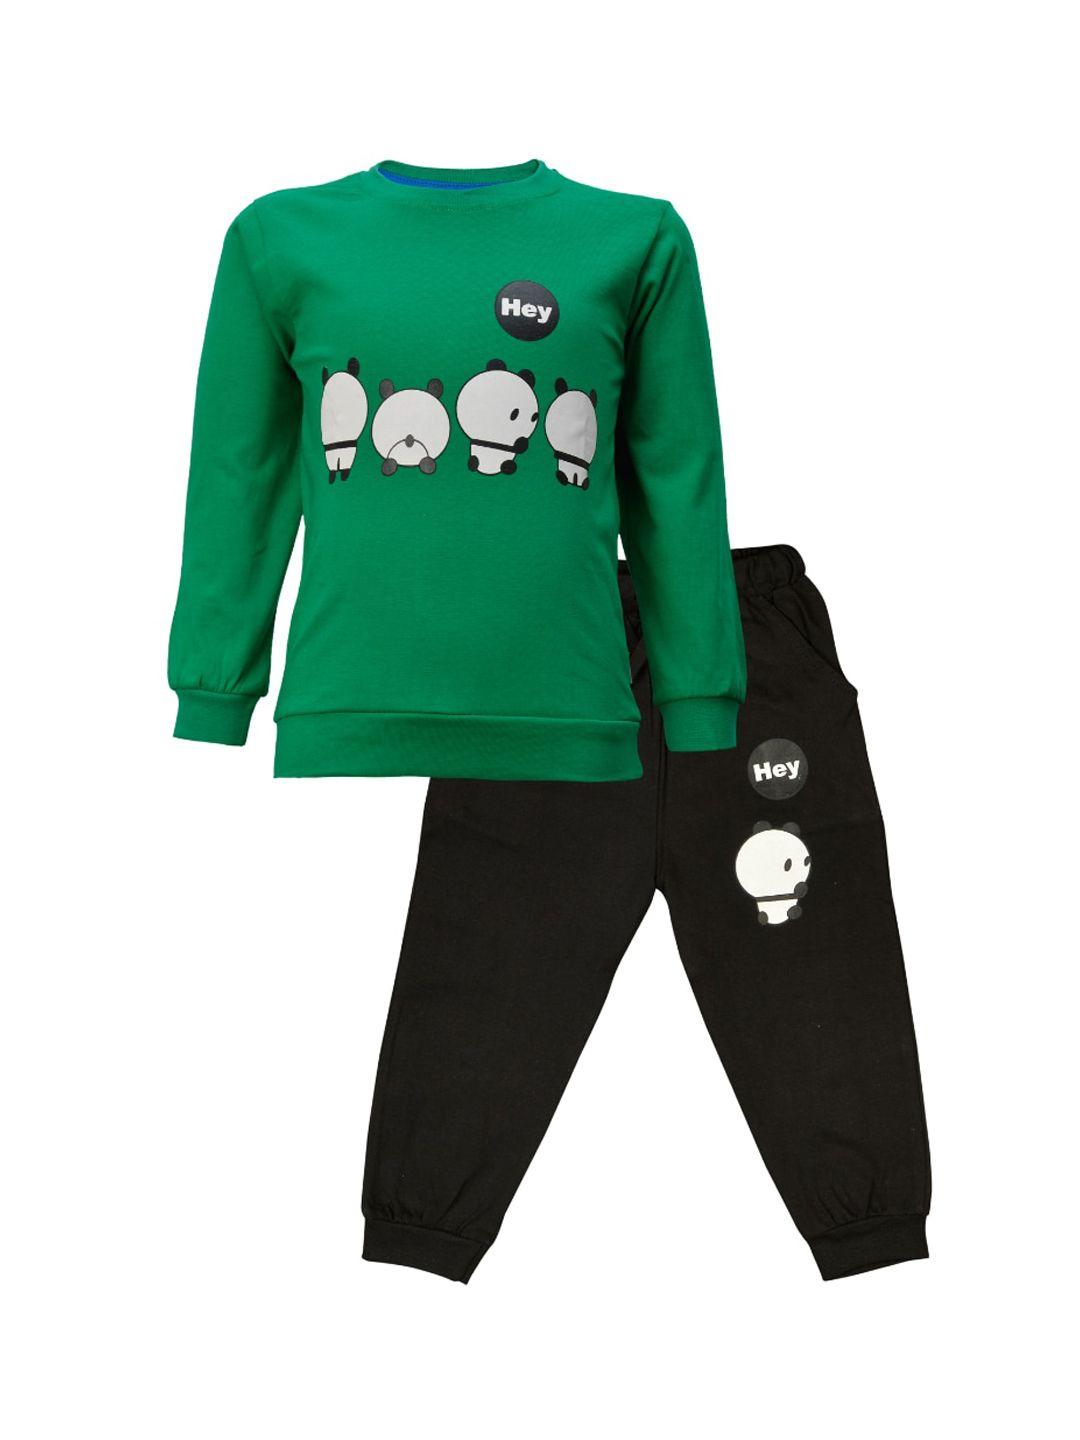 catcub unisex kids green & black panda print clothing set